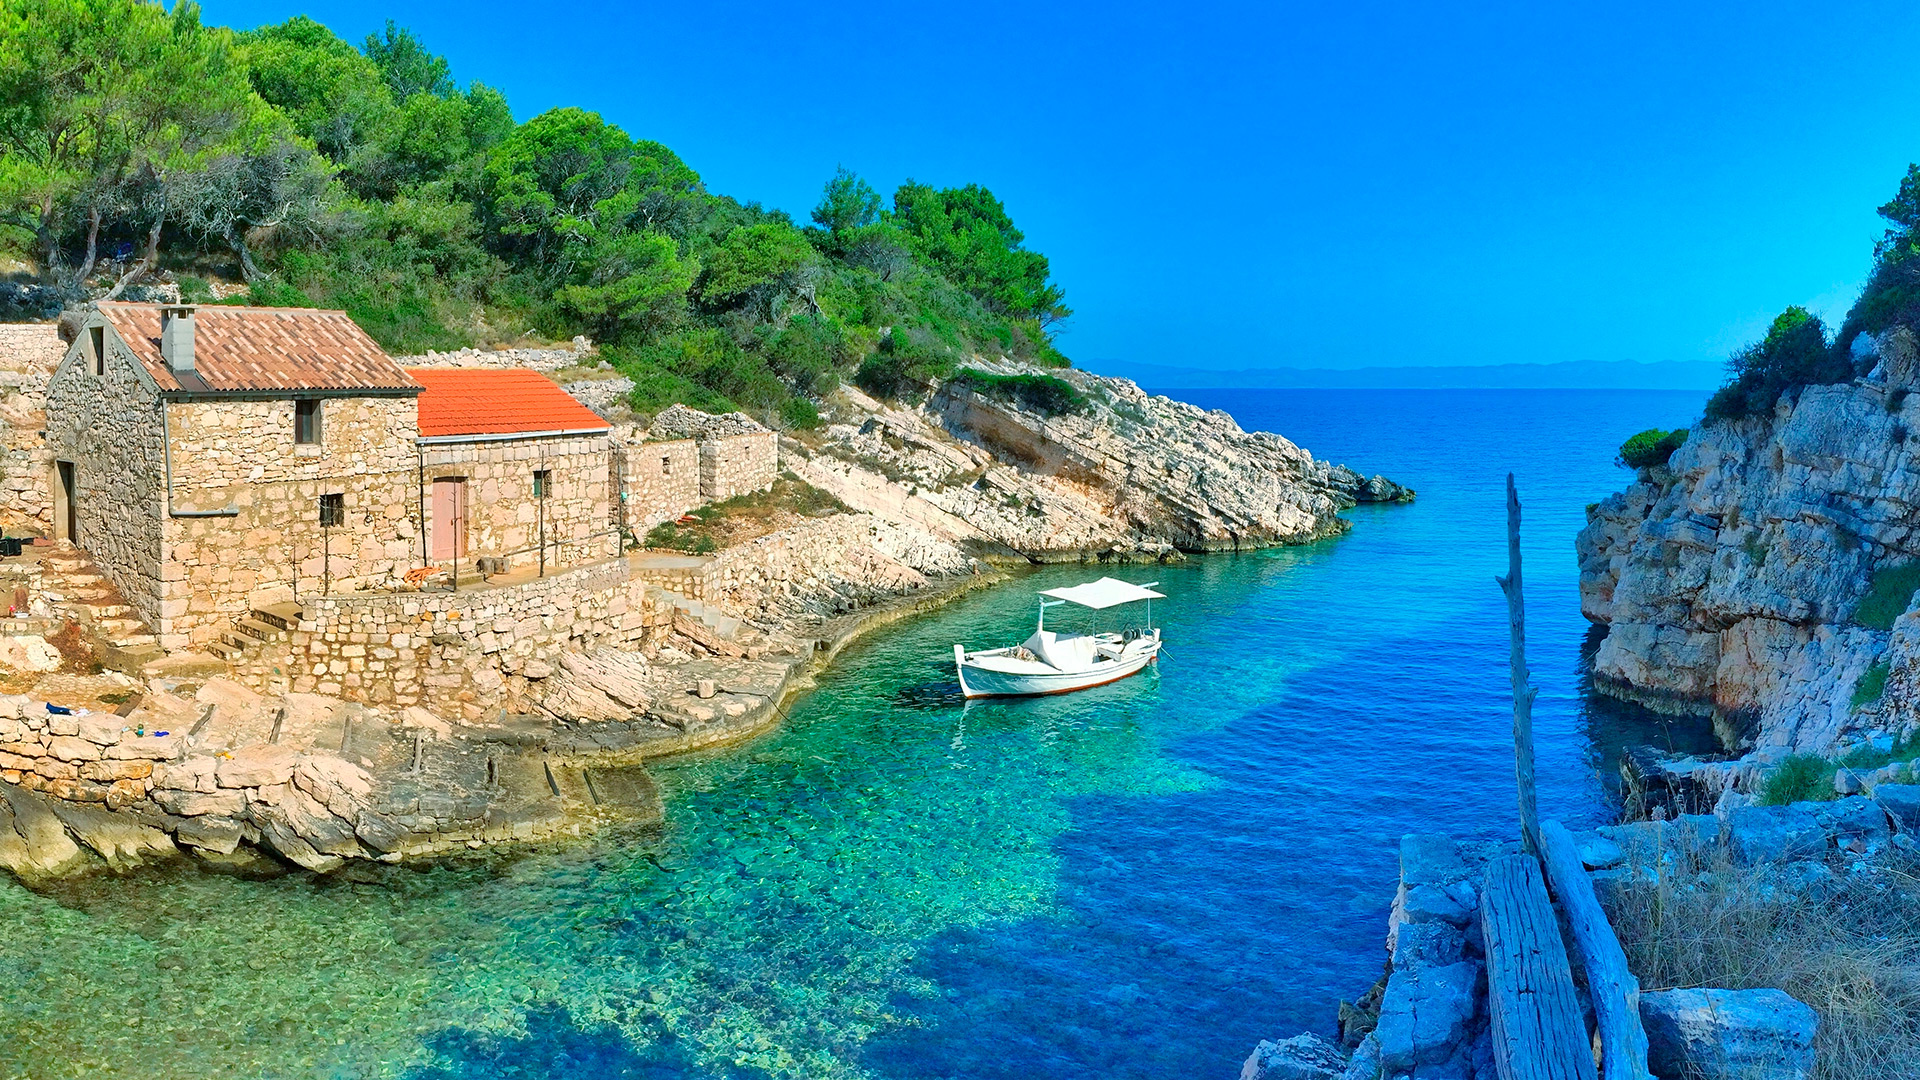 Bay with old stone houses and fishing boat, Lastovo island, Croatia